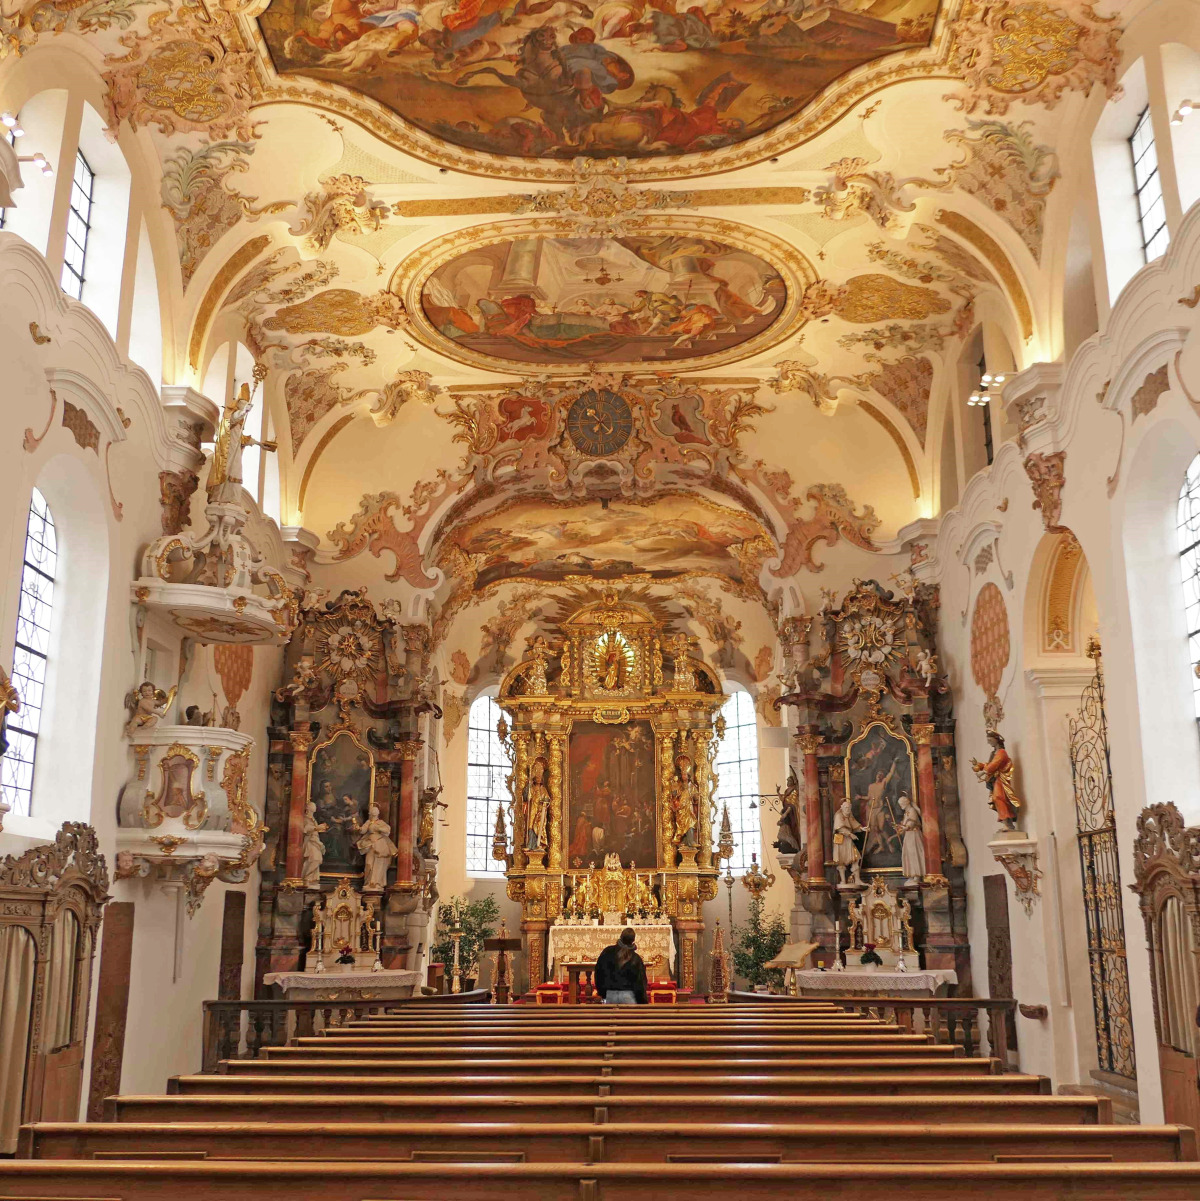 Katholische Pfarrkirche St. Ulrich in Eresing, Landkreis Landsberg am Lech